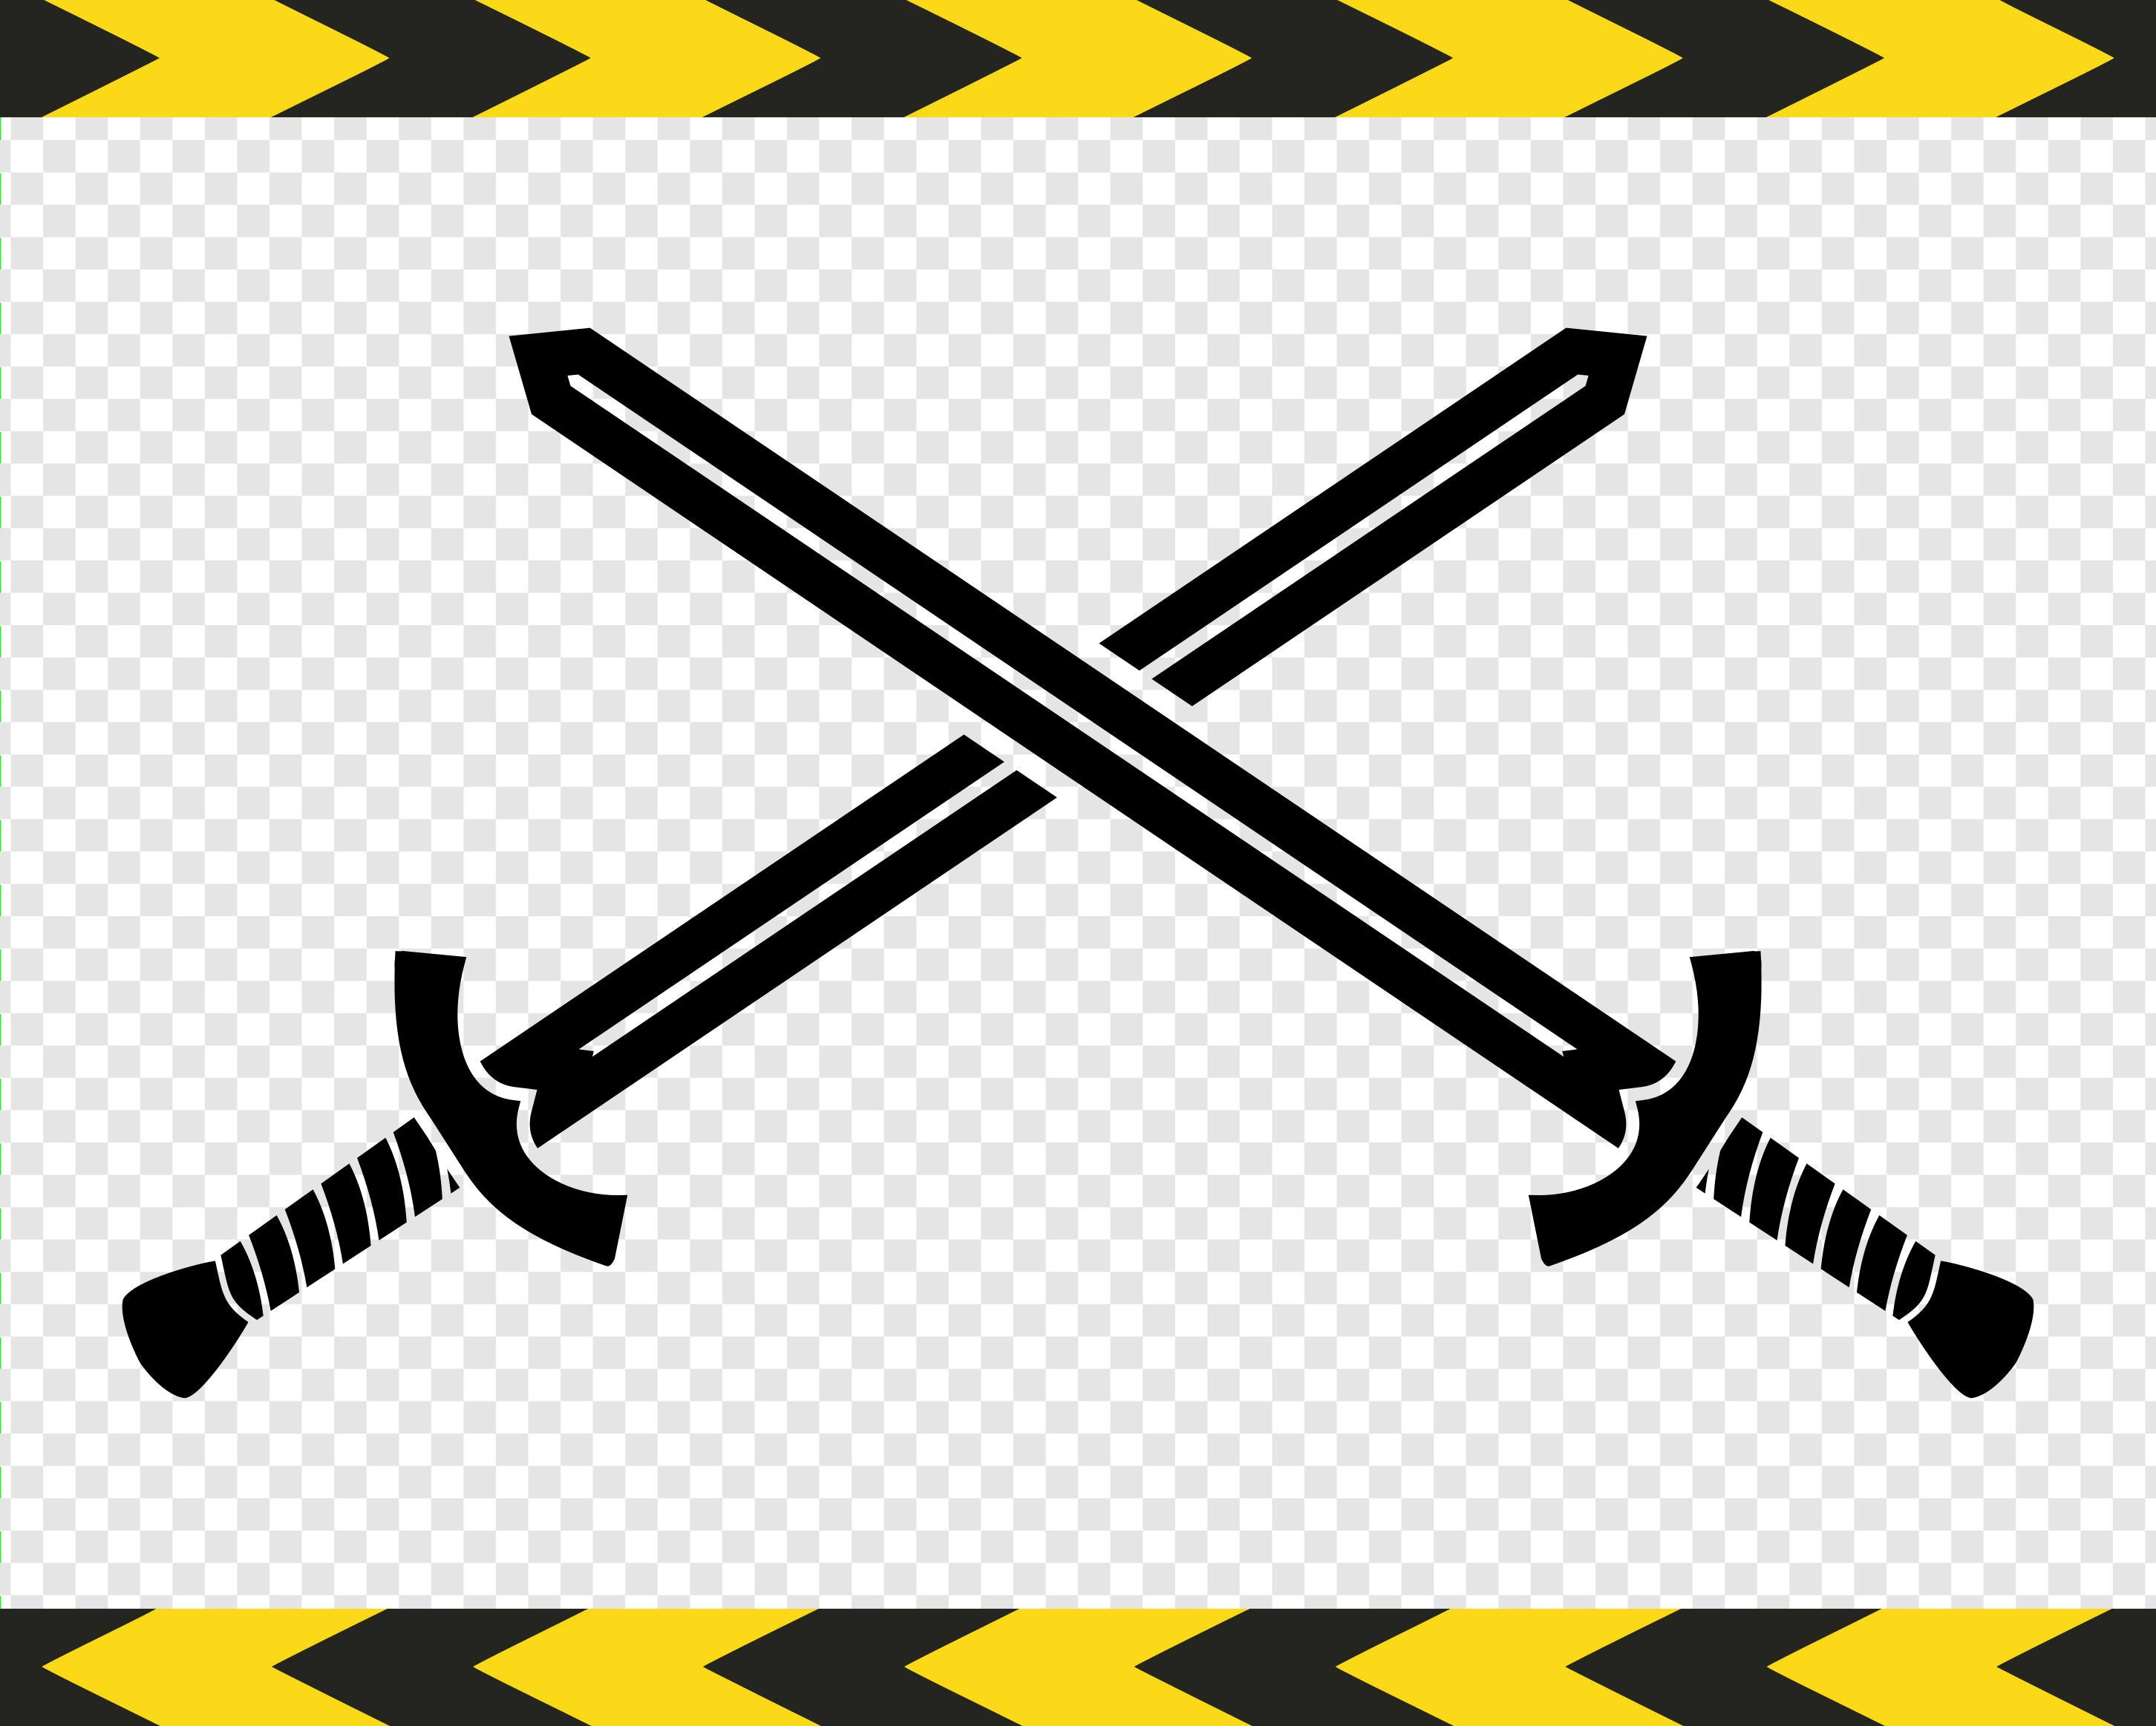 SVG > crossed swords - Free SVG Image & Icon.